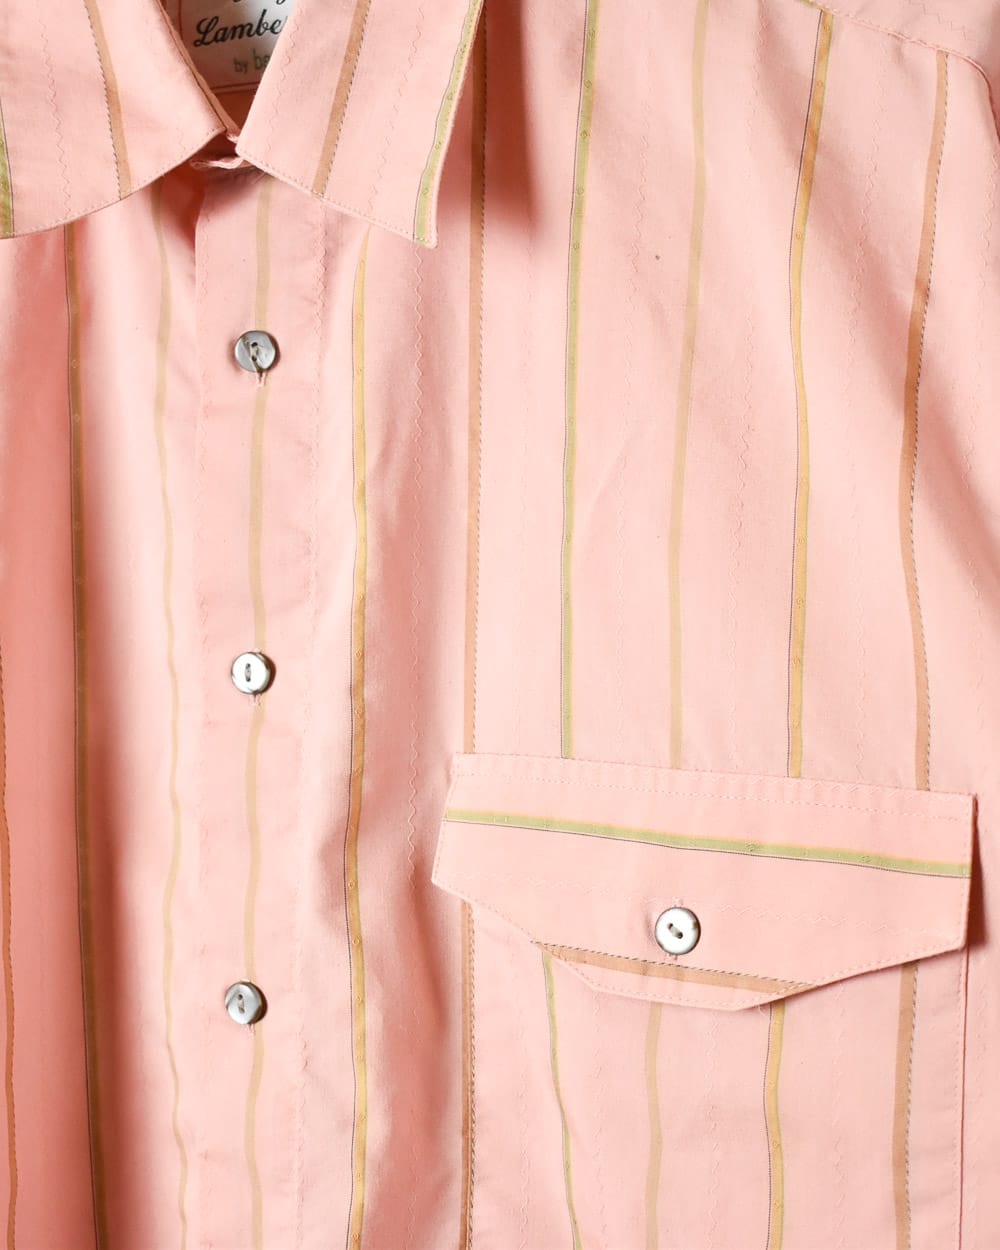 Pink Striped Short Sleeved Shirt - Large